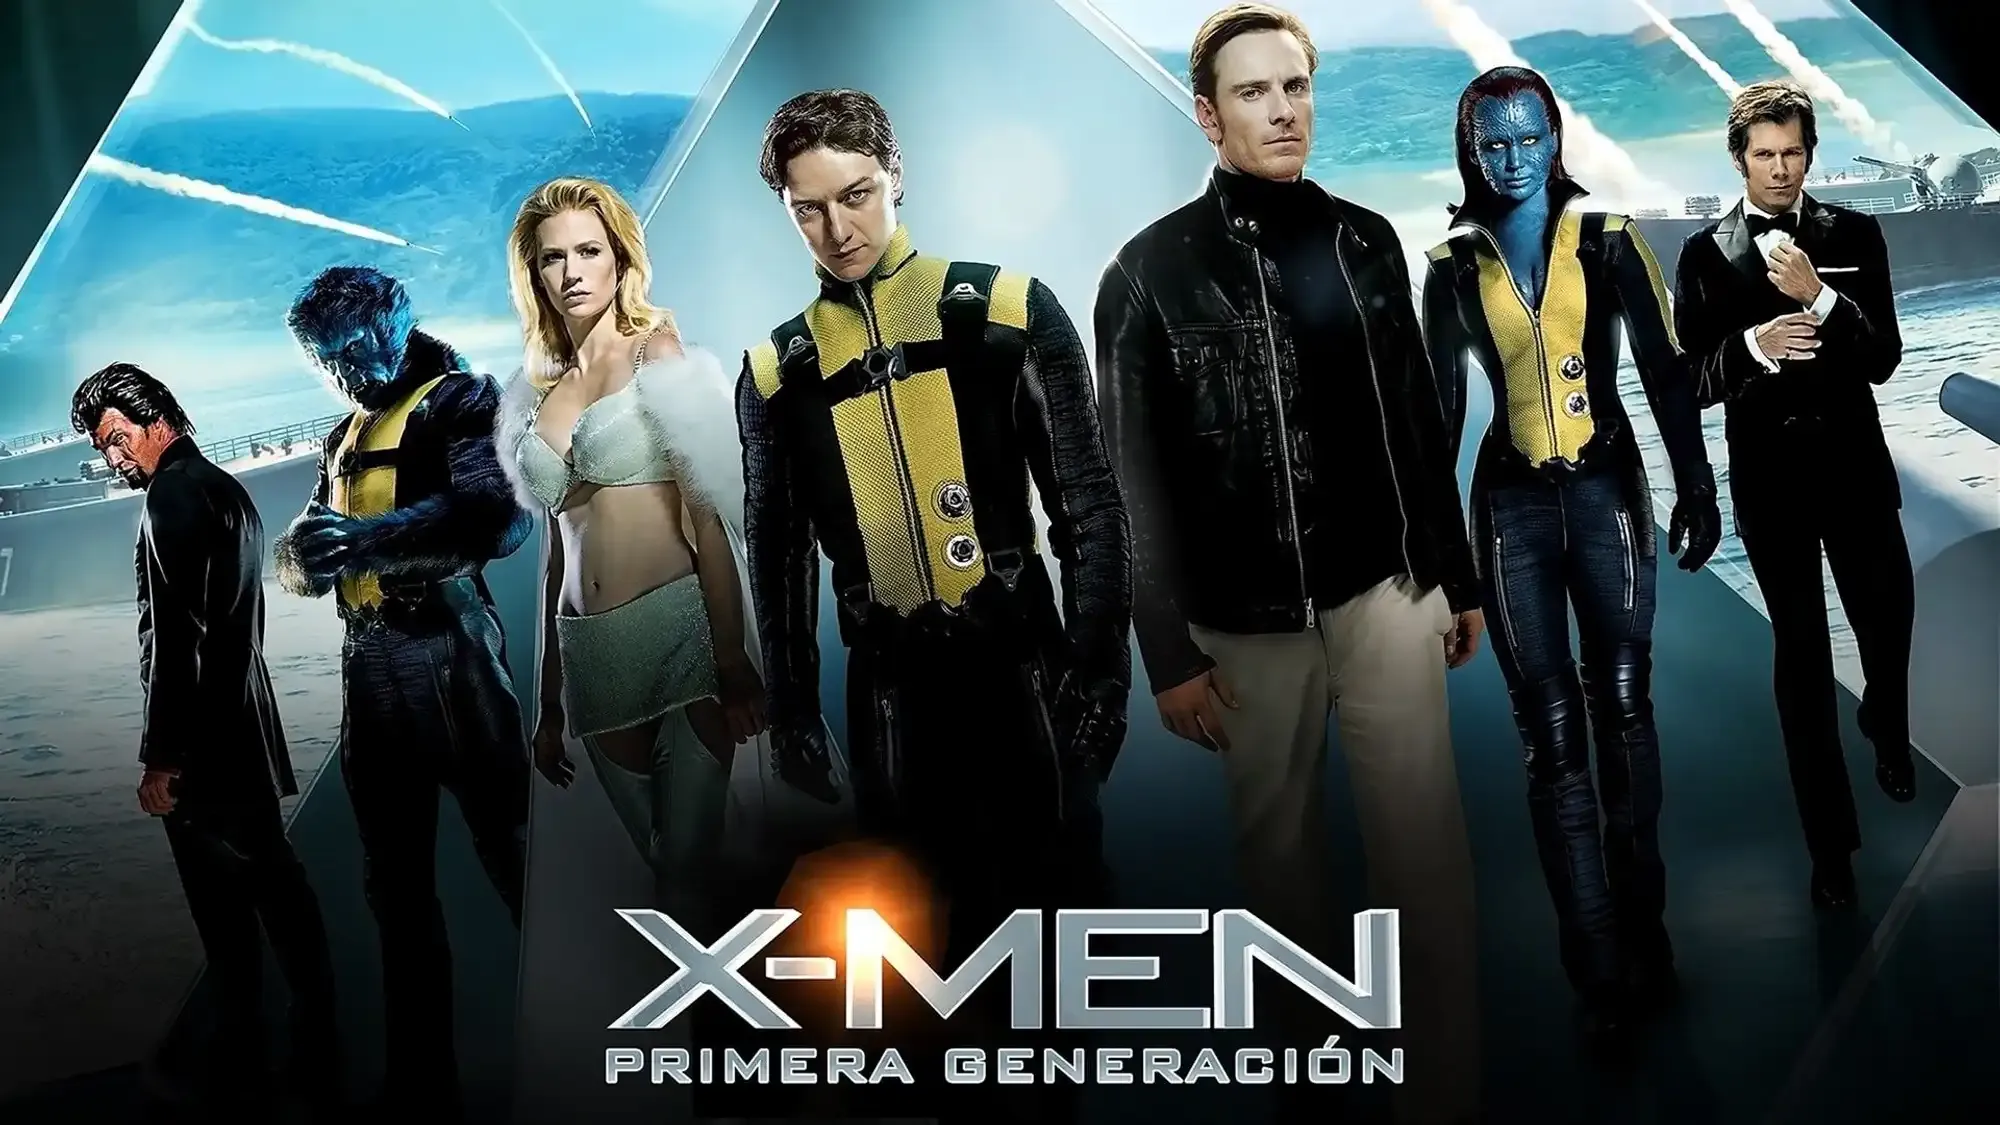 X-Men: First Class movie review